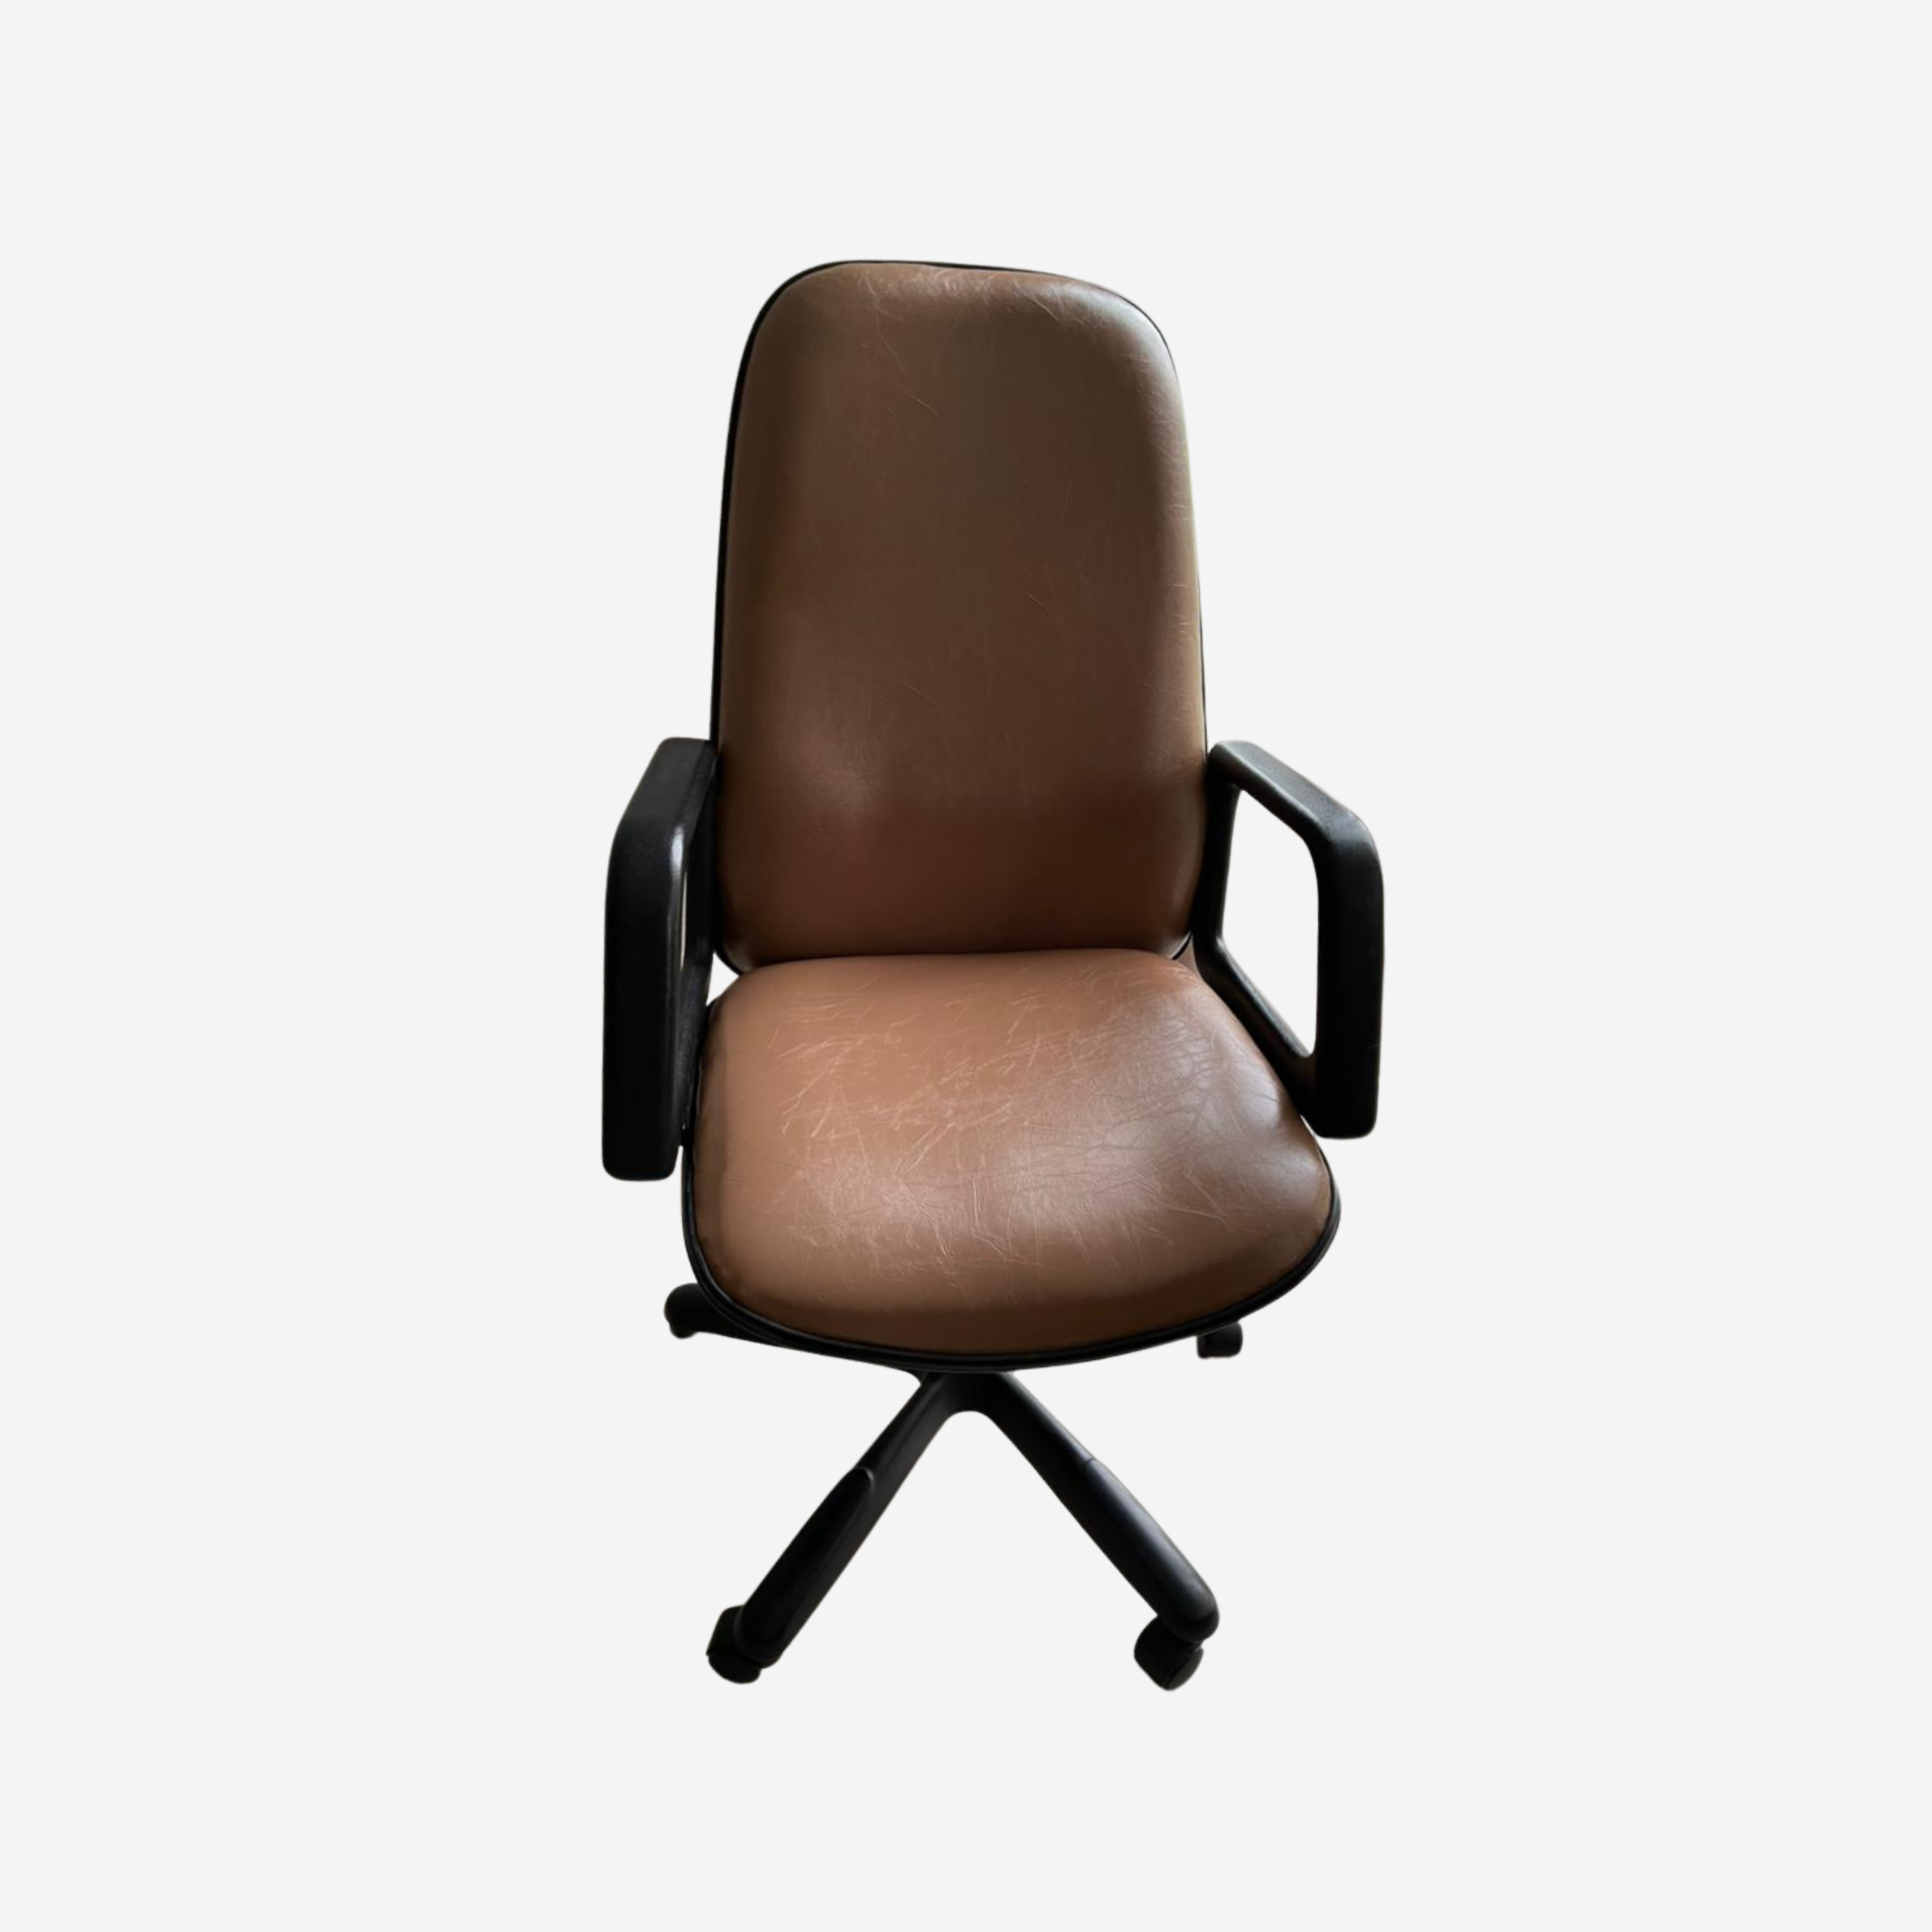 Verona Office Chair